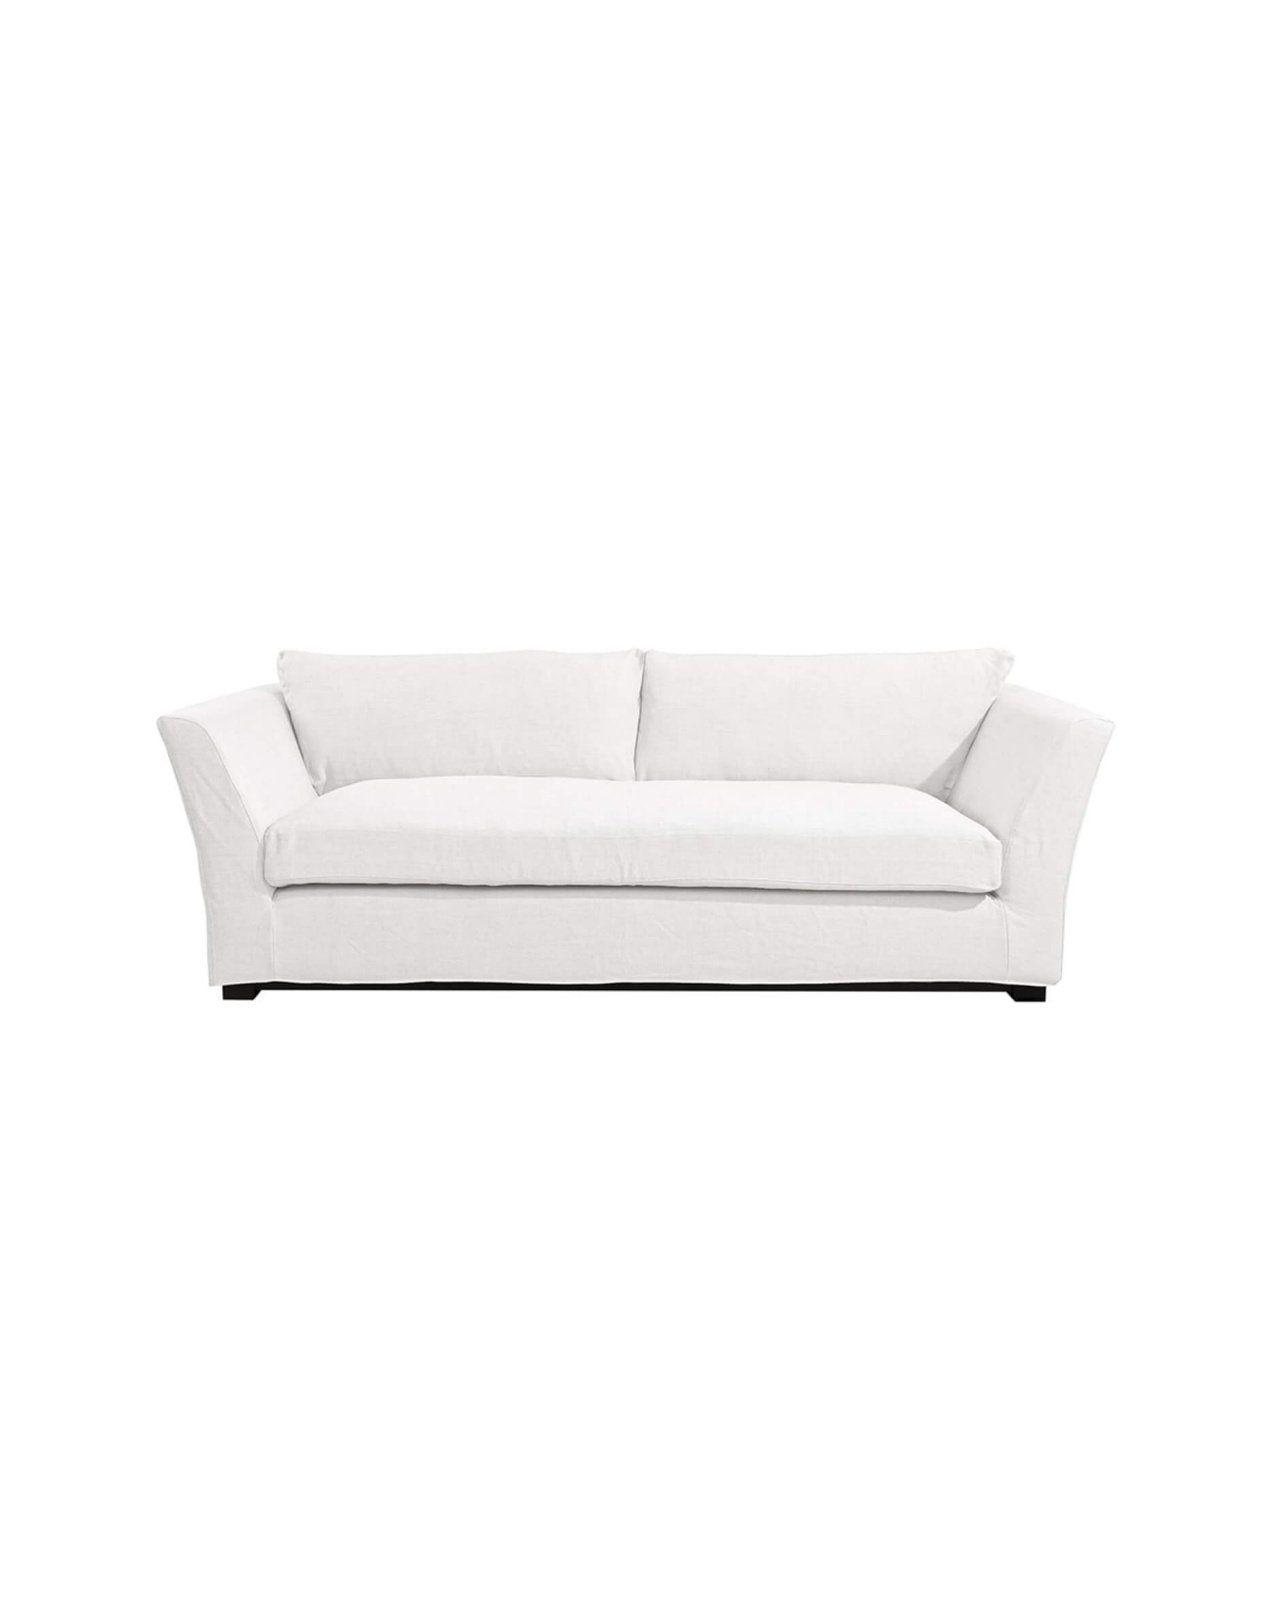 Stafford soffa tobago white